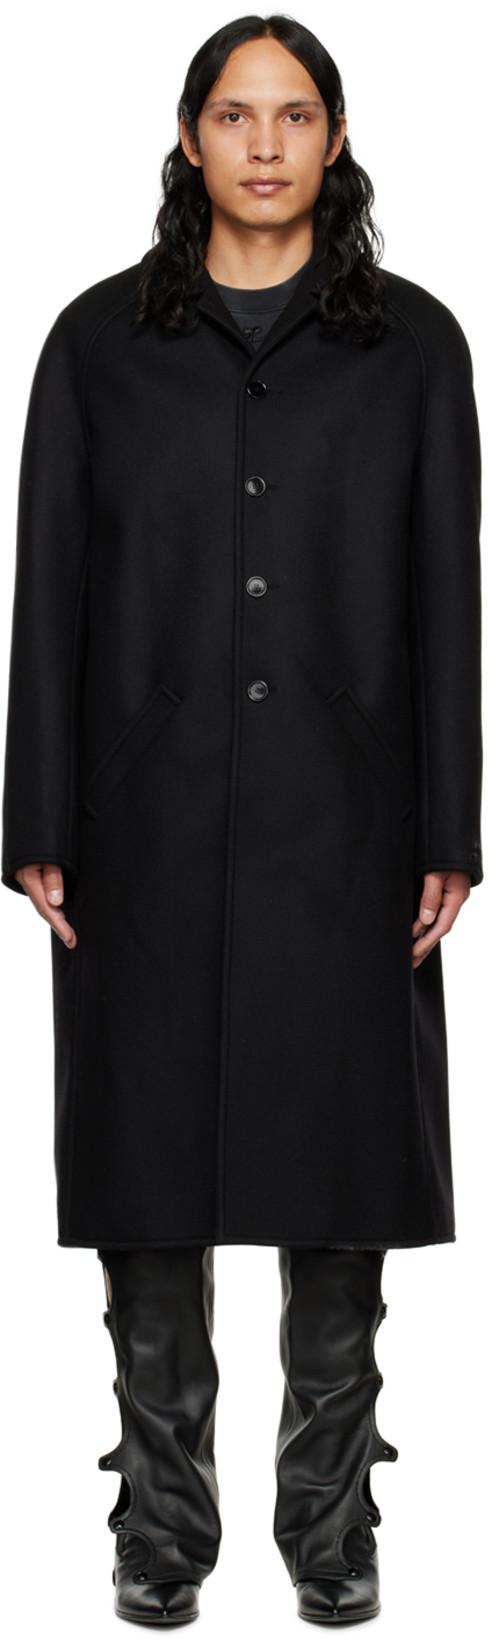 Black Long Oversize Coat by COURREGES